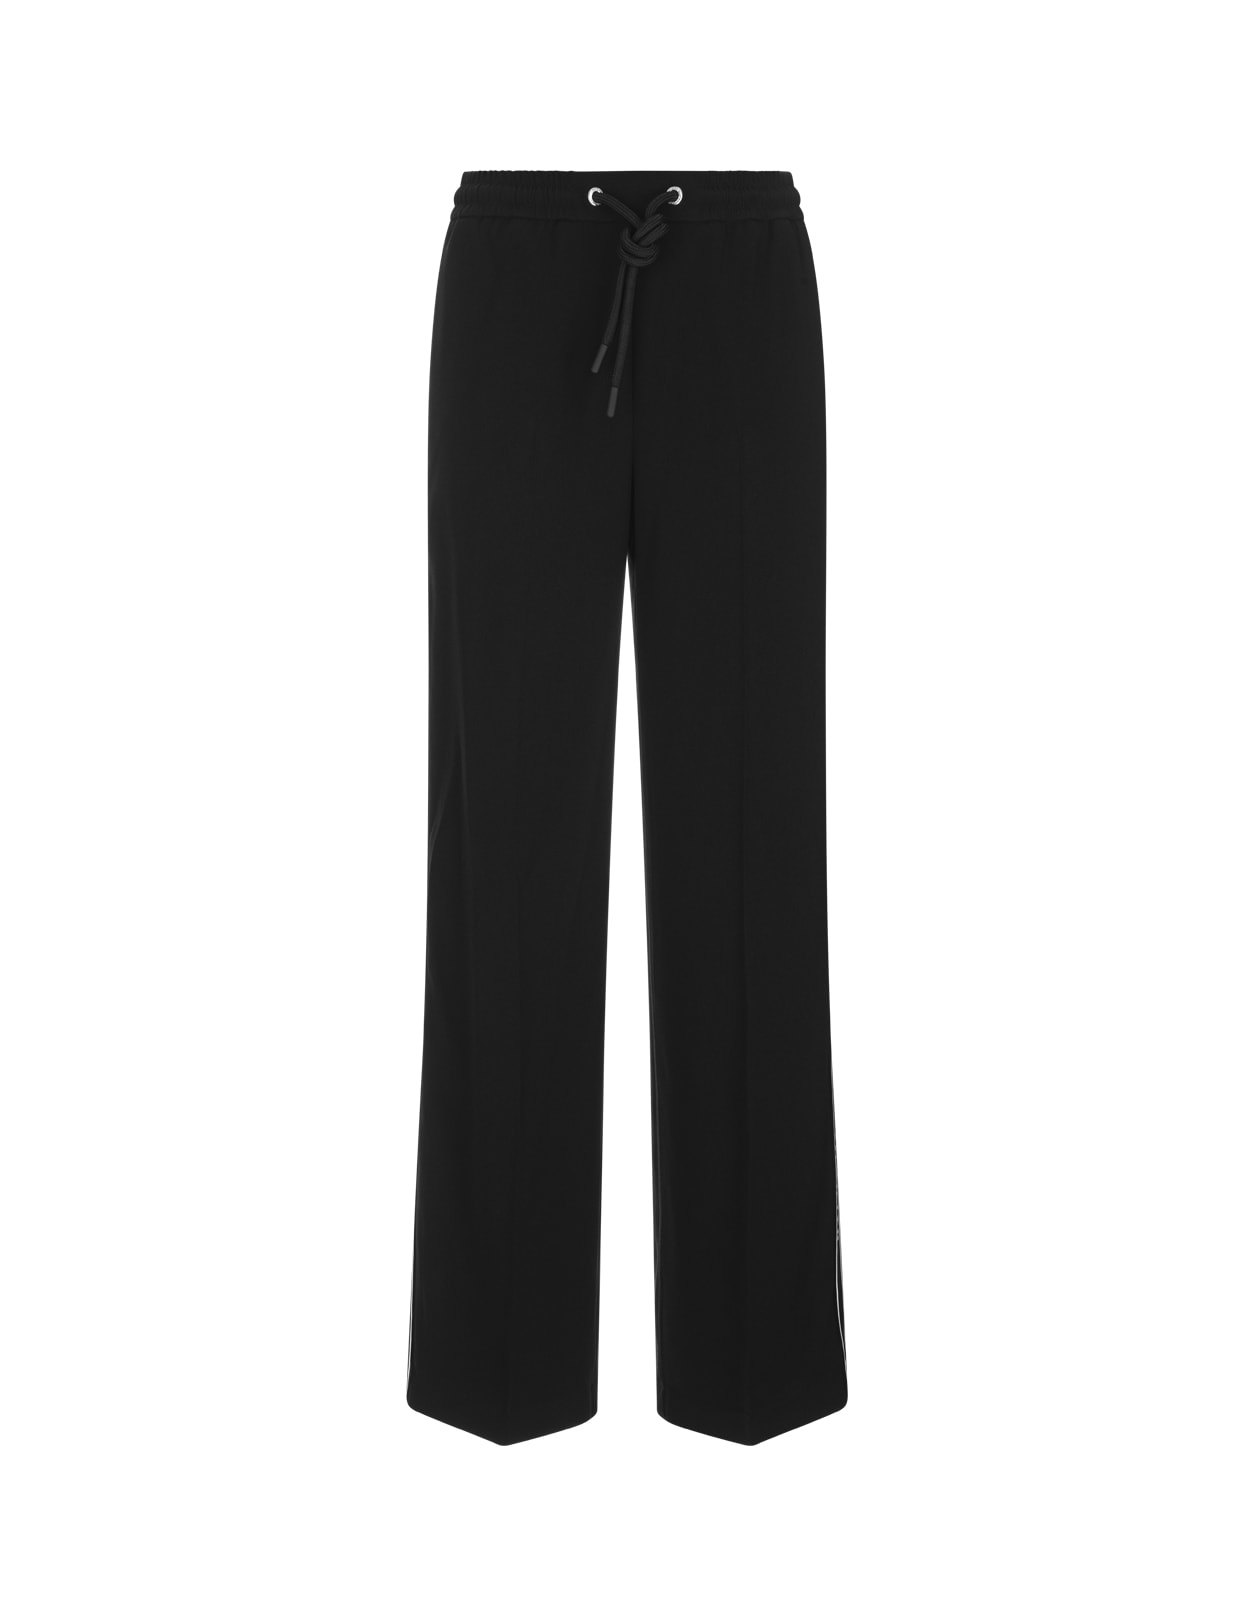 Moncler Black Satin Sports Trousers